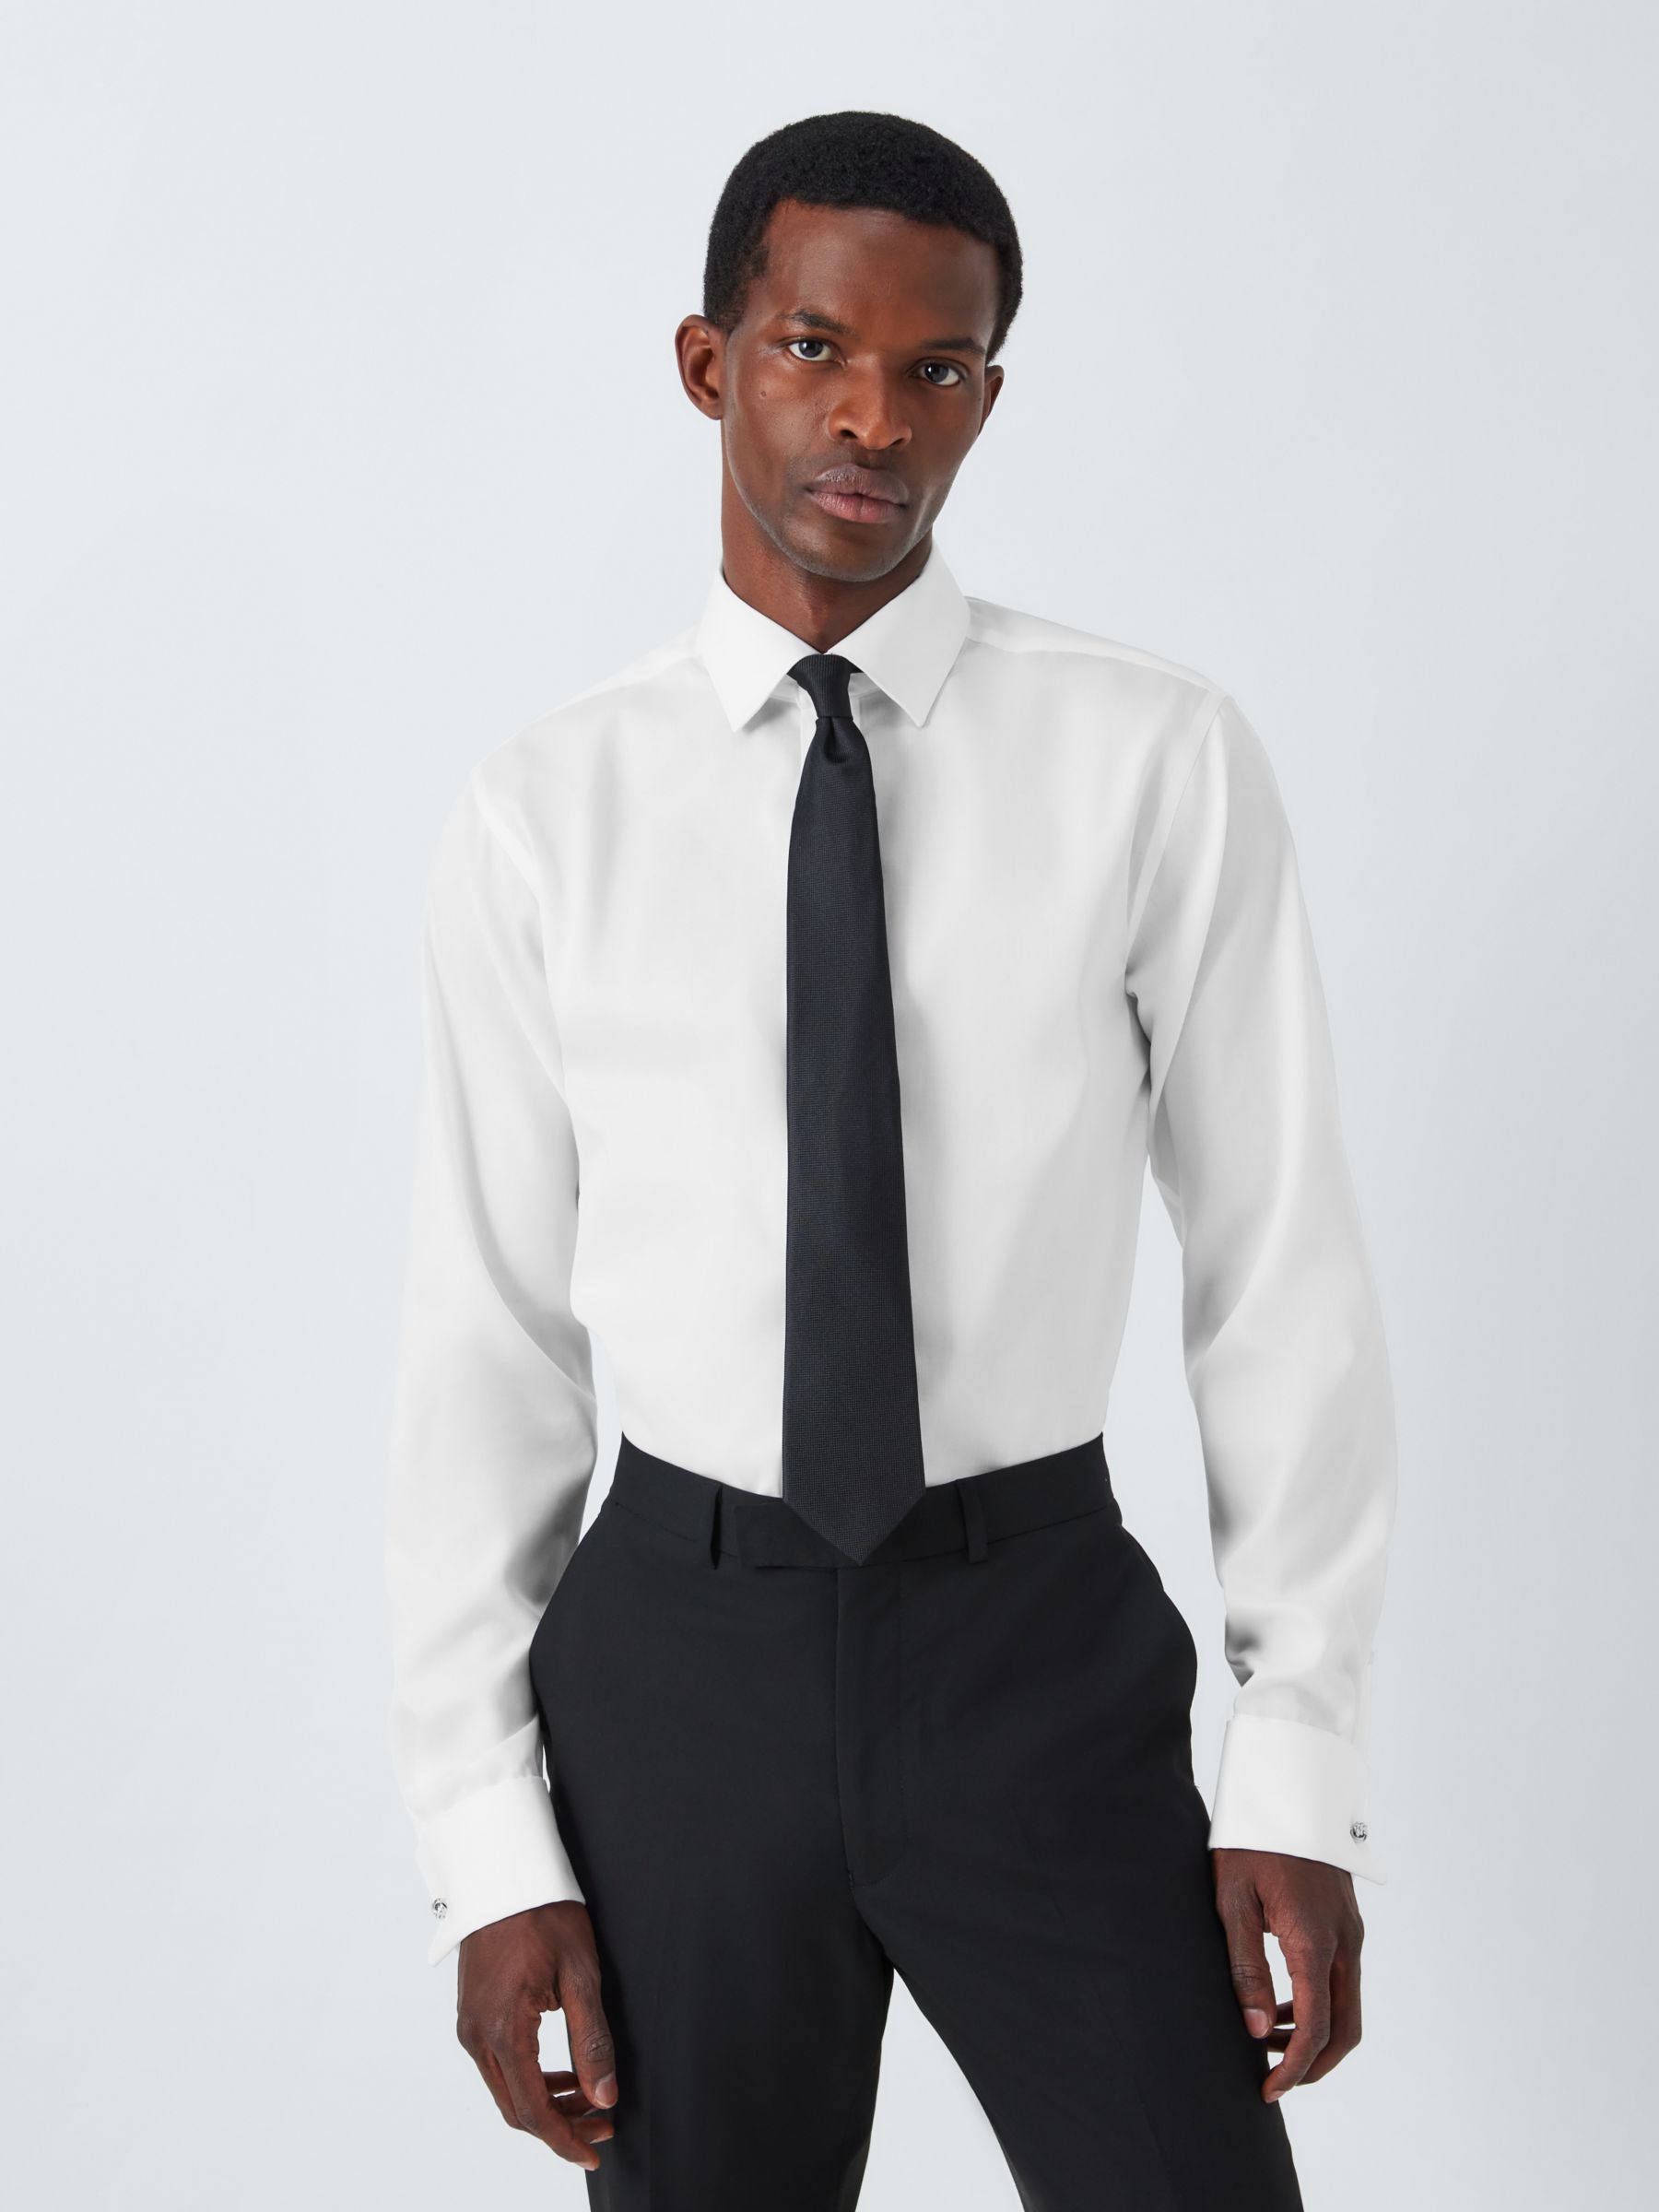 John Lewis Non Iron Twill Double Cuff Slim Fit Shirt, White, 17.5R